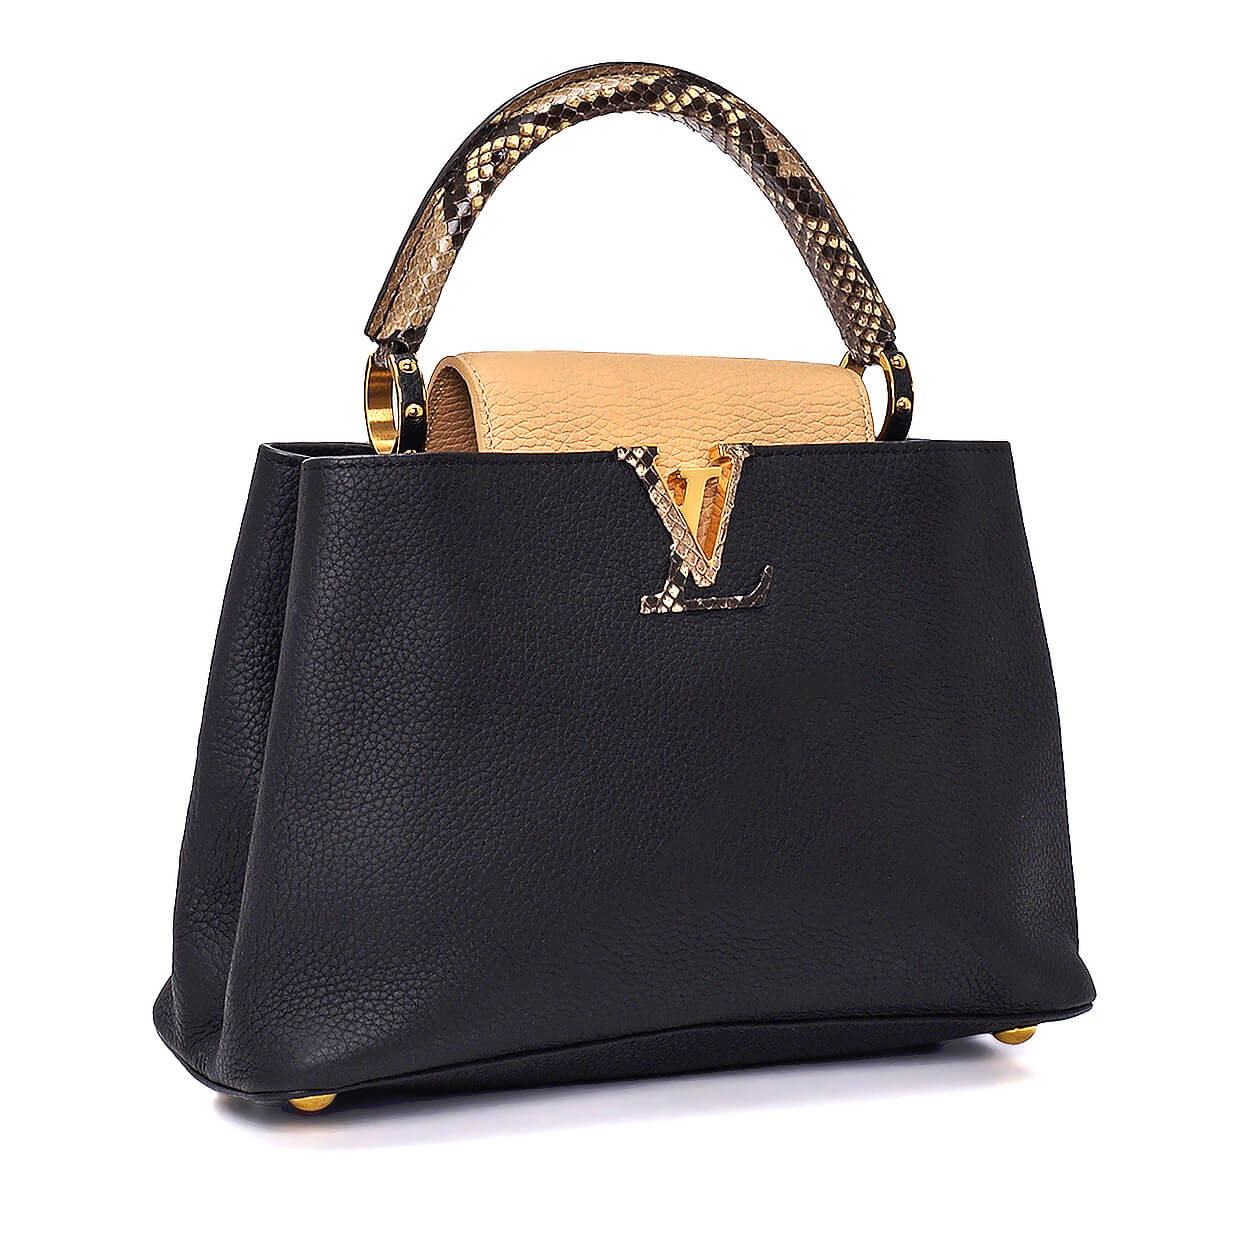 Louis Vuitton - Black & Beige Taurillon Leather Exotic Leather Handle Capucines Bag